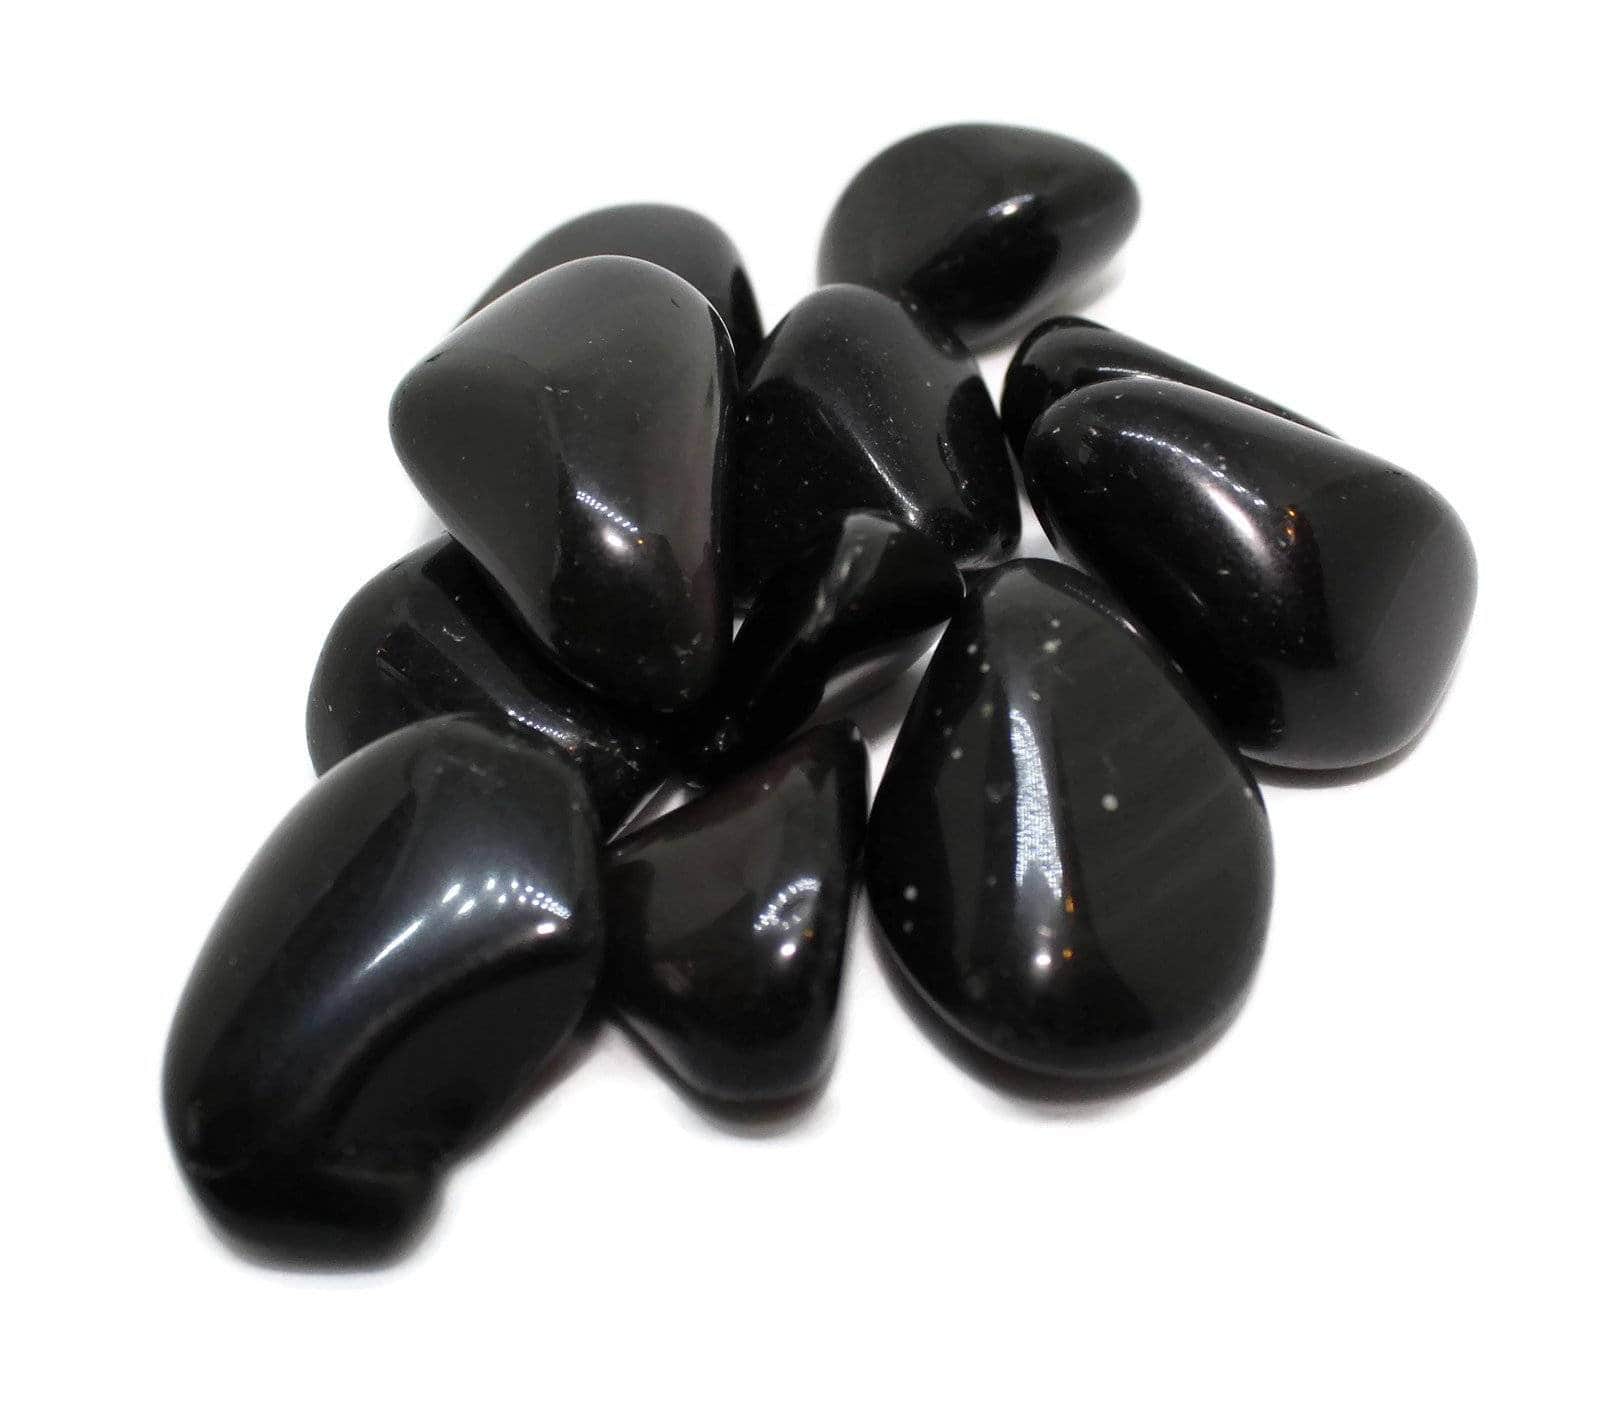 Tumbled Obsidian - Buy Rainbow Obsidian tumblestones online UK